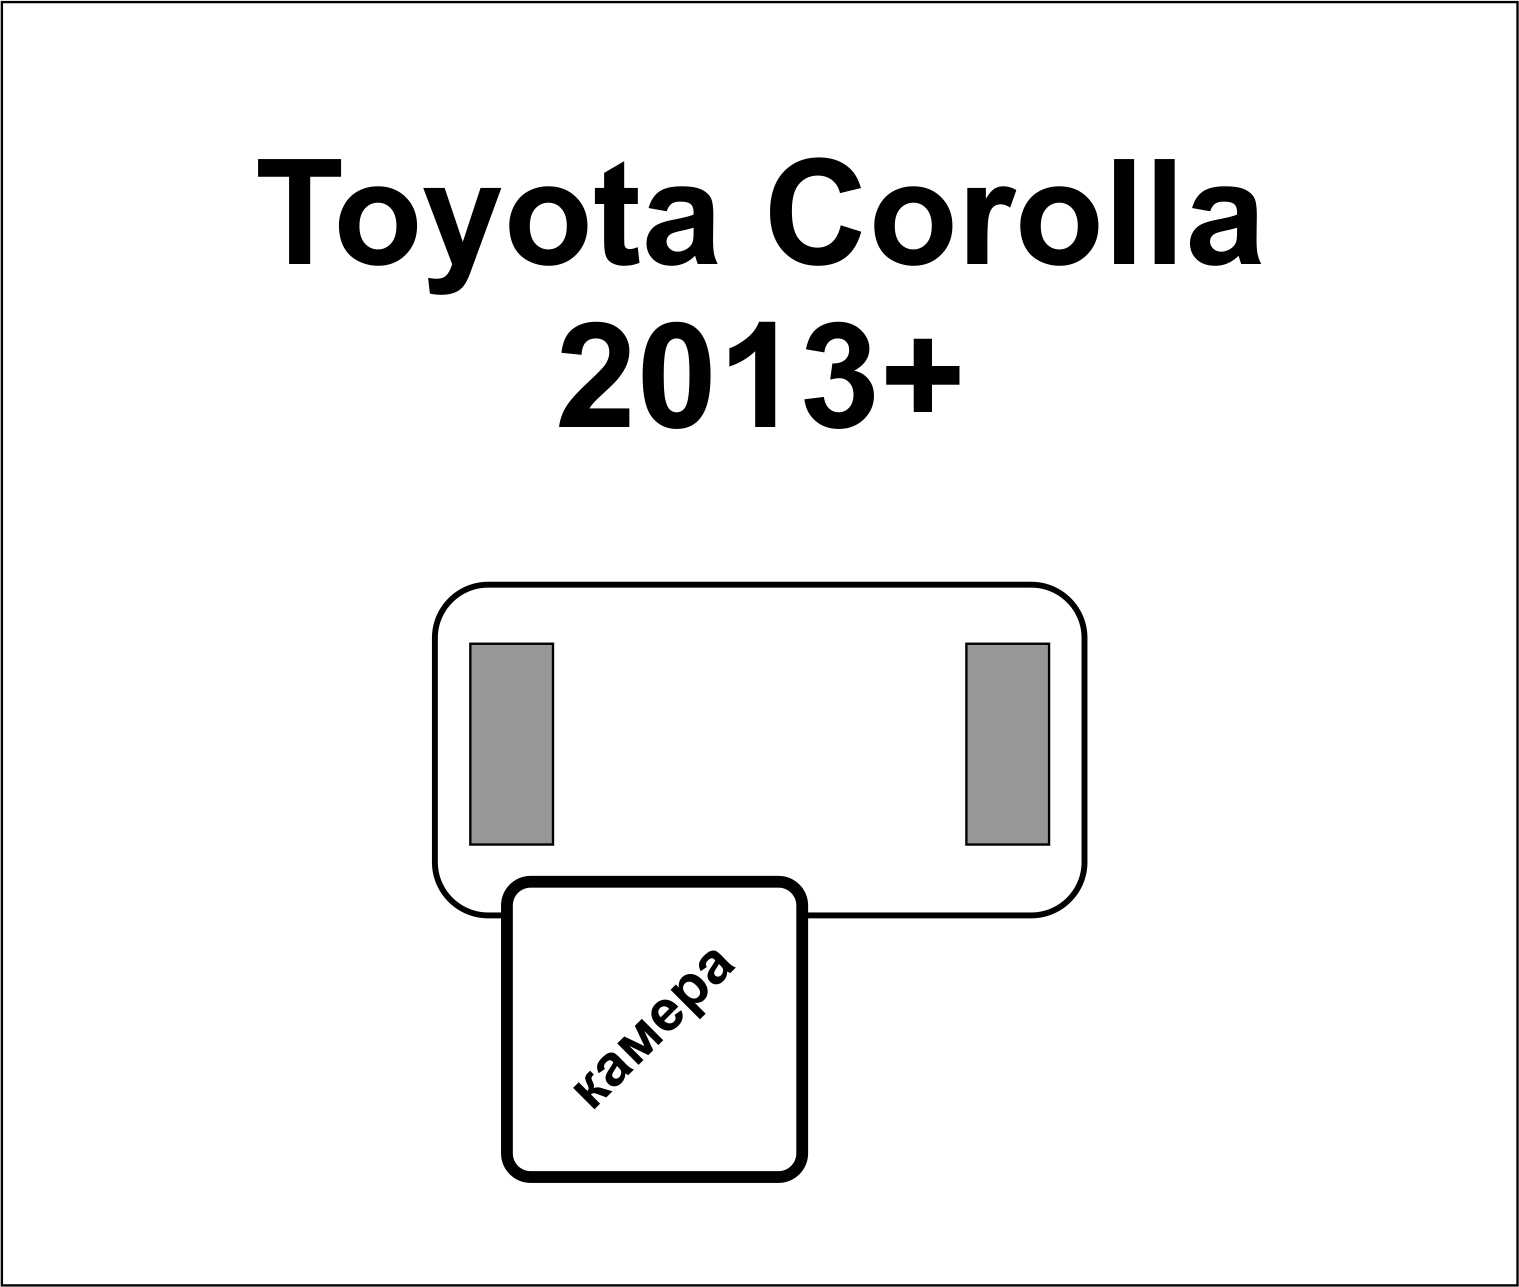 Toyota Corolla 2013+